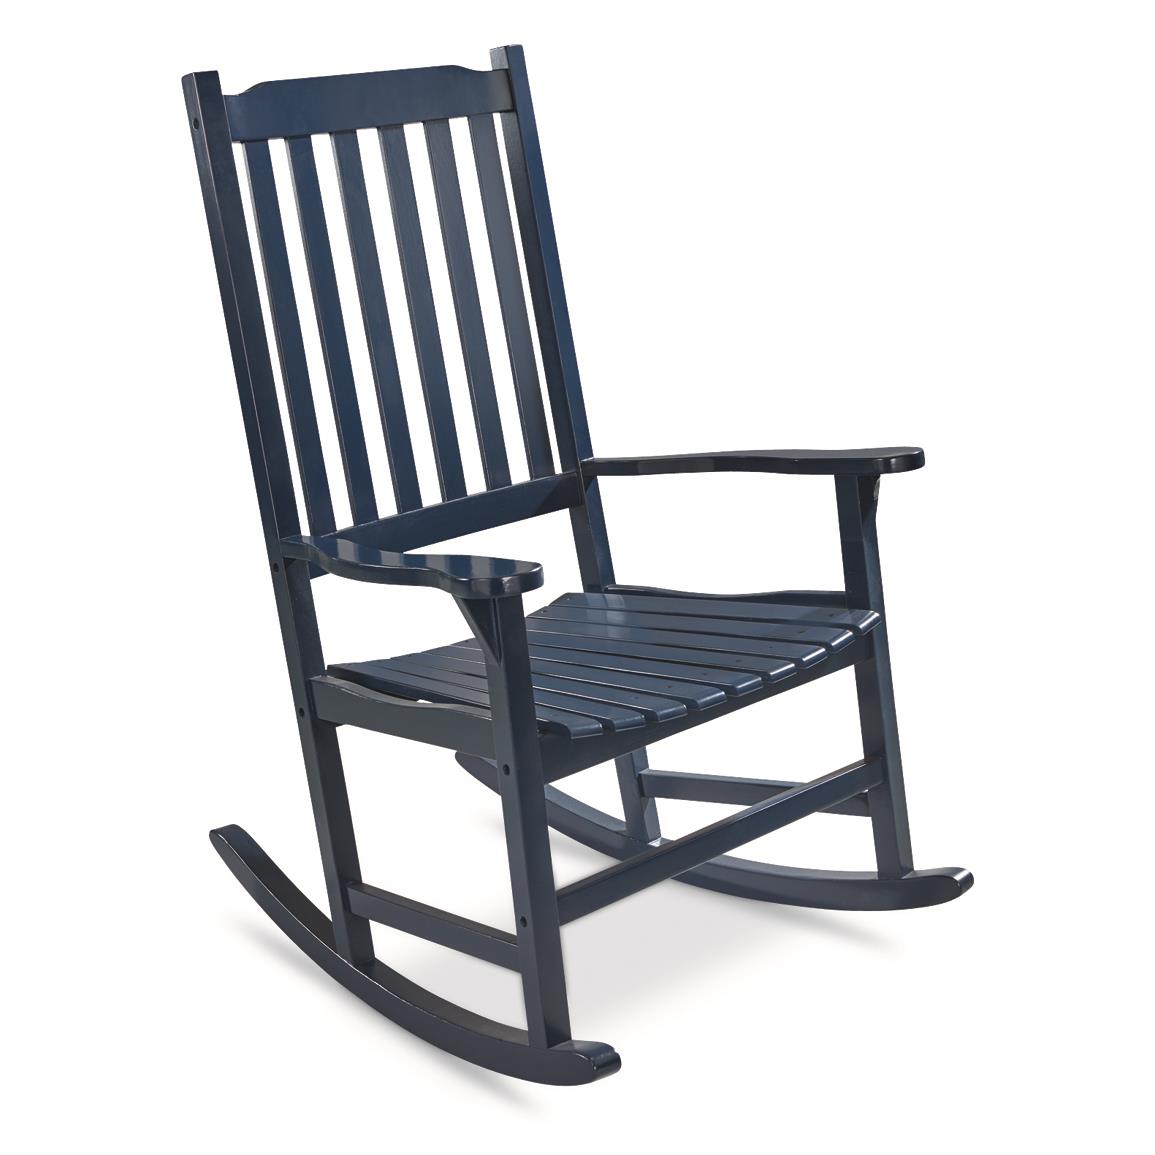 CASTLECREEK Oversized Rocking Chair, 400lb. Capacity